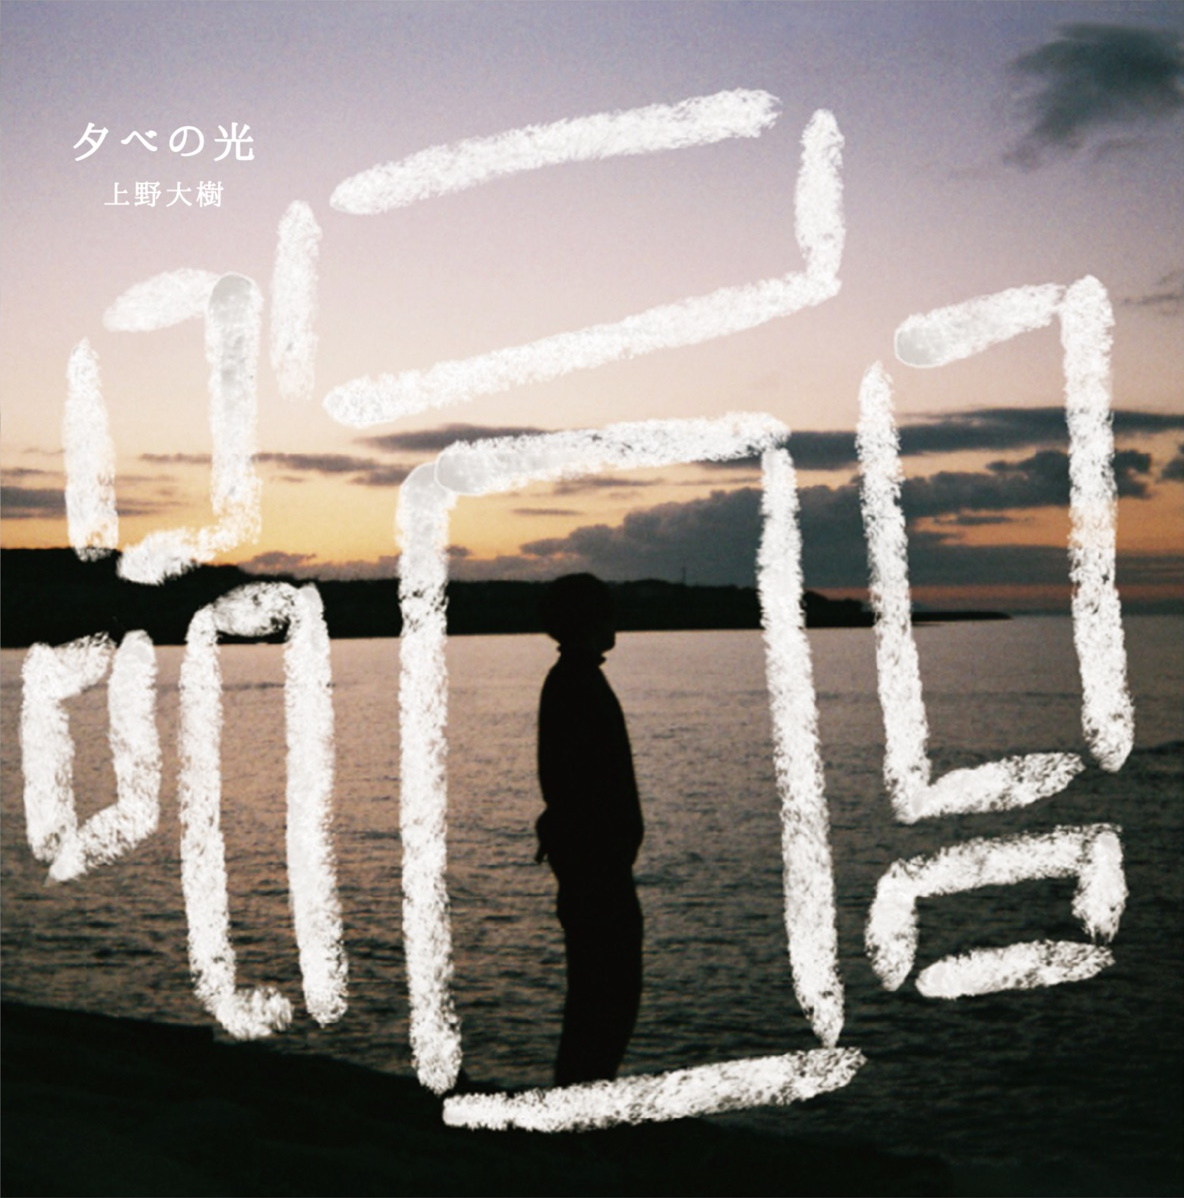 Cover for『UENO DAIKI - Yuube no Hikari』from the release『Yuube no Hikari』